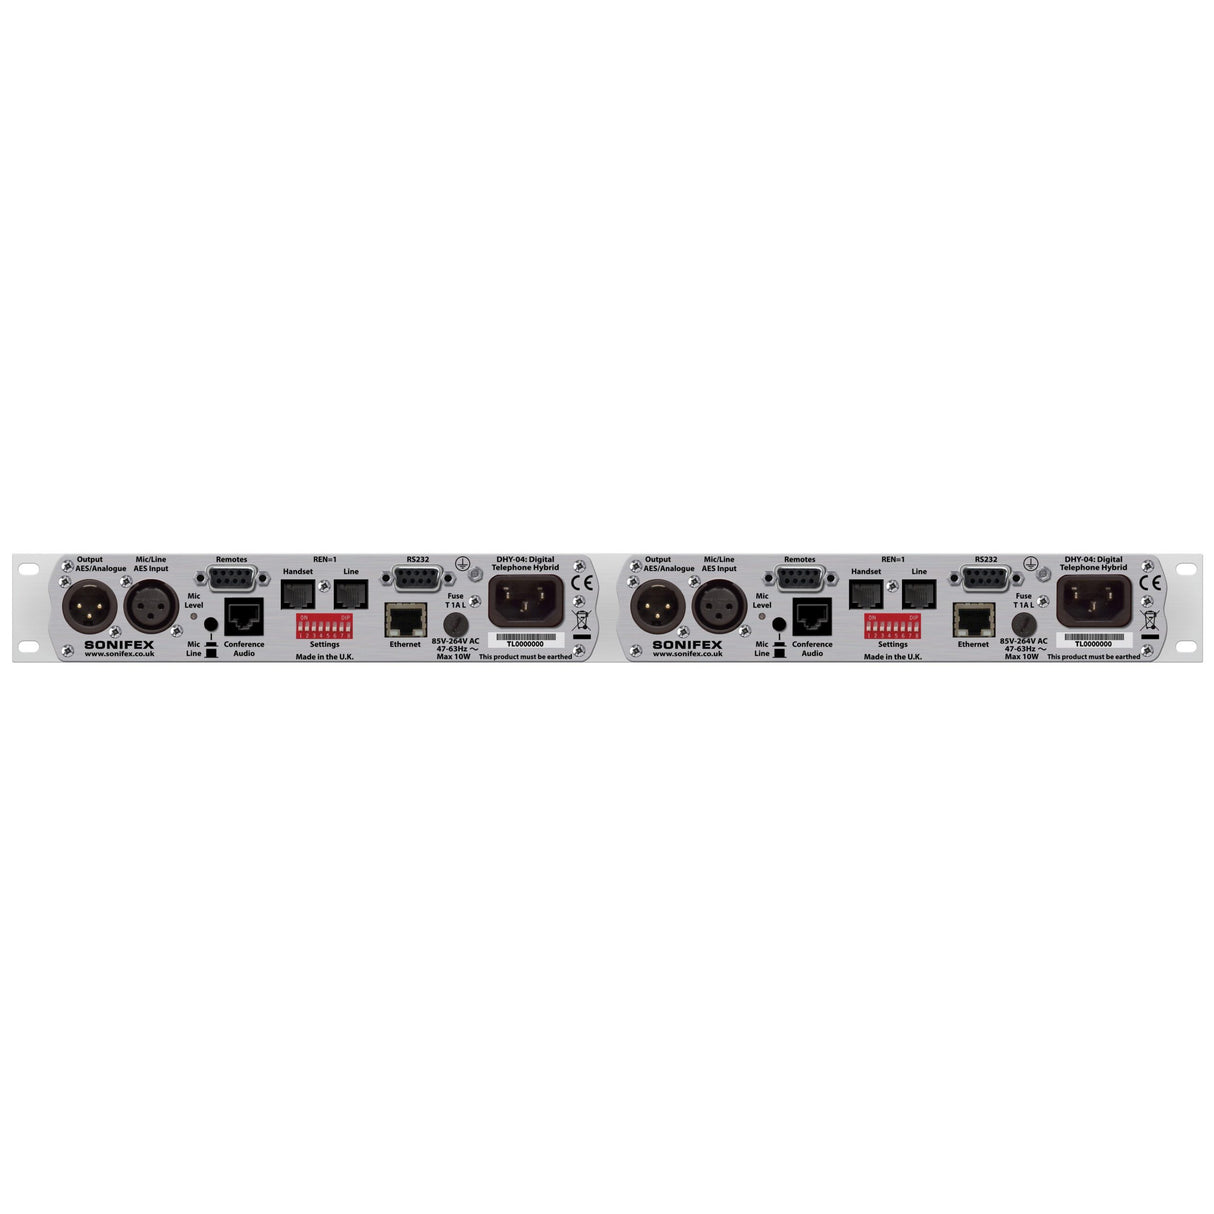 Sonifex DHY-04T Twin Digital TBU,AES/EBU, Analogue, Ethernet, Rack Mounted